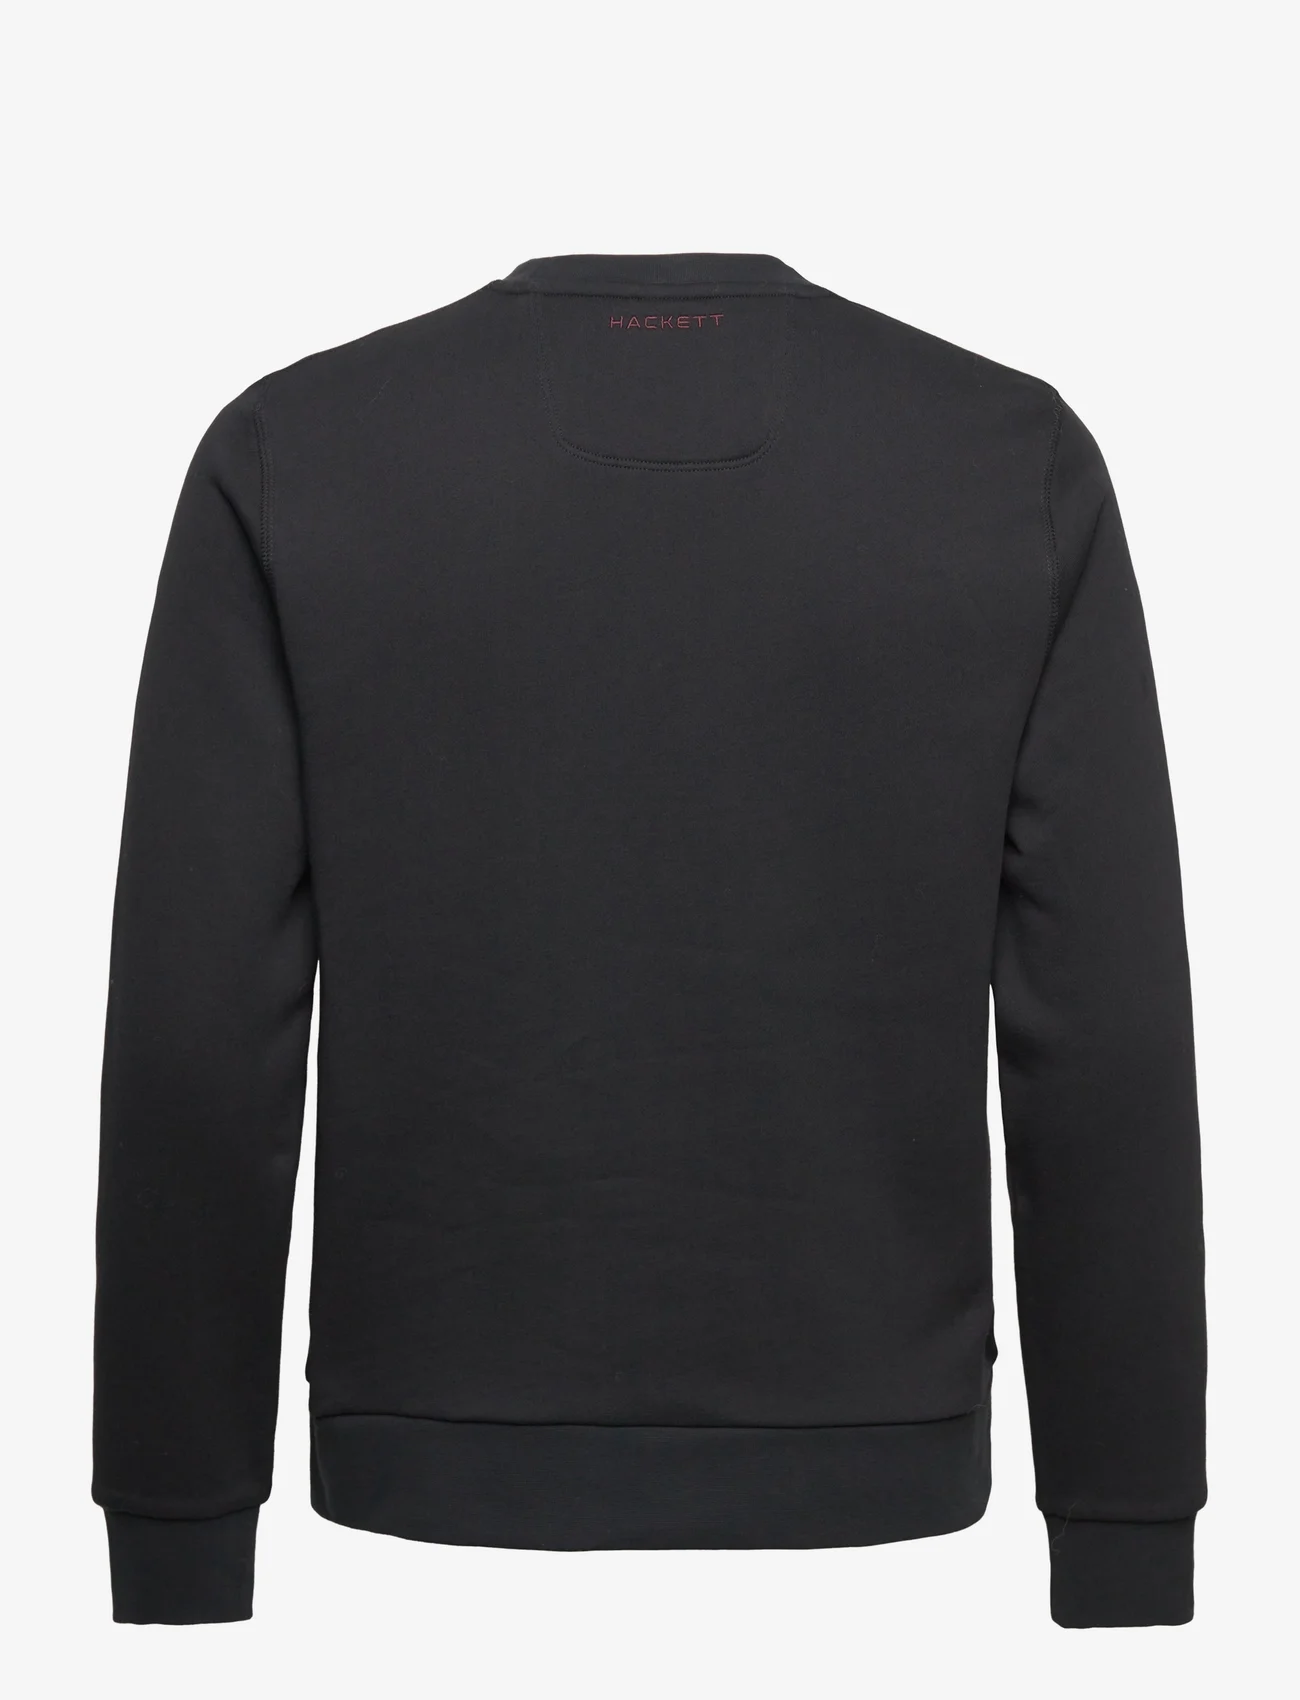 Hackett London - AM EMBOSSED CREW - sweatshirts - black - 1